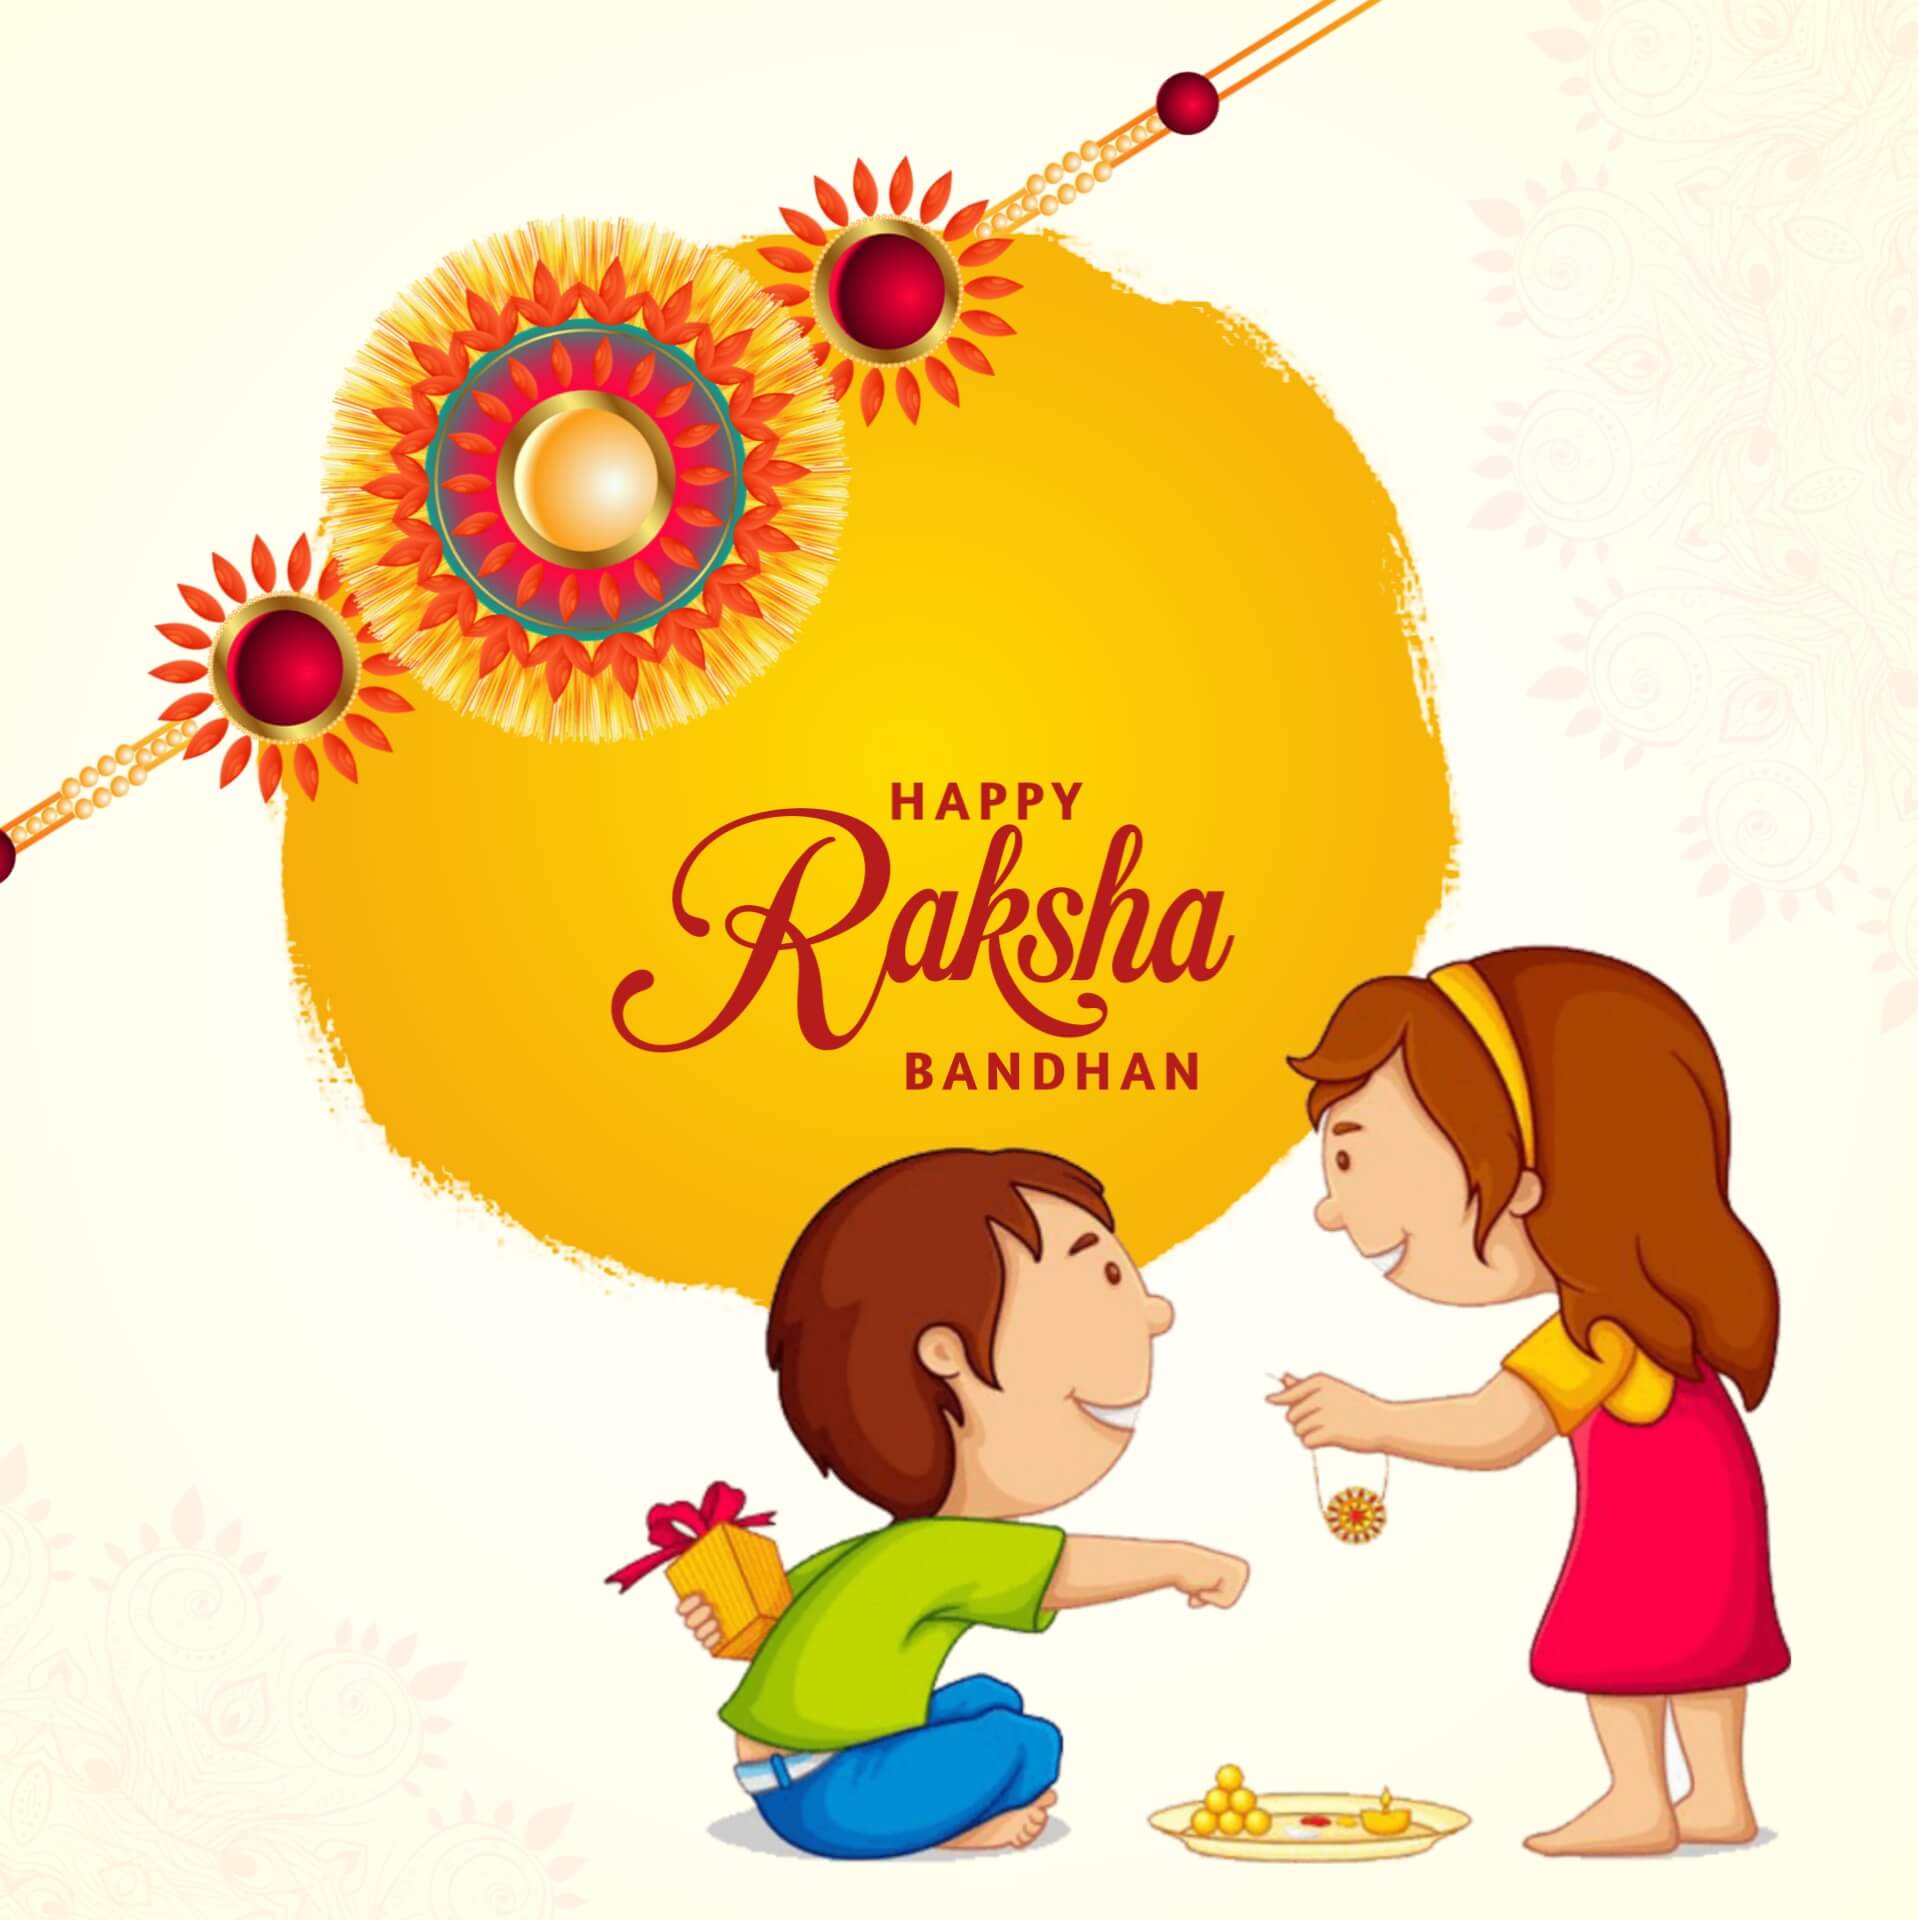 Brother and sister Happy Raksha Bandhan Image